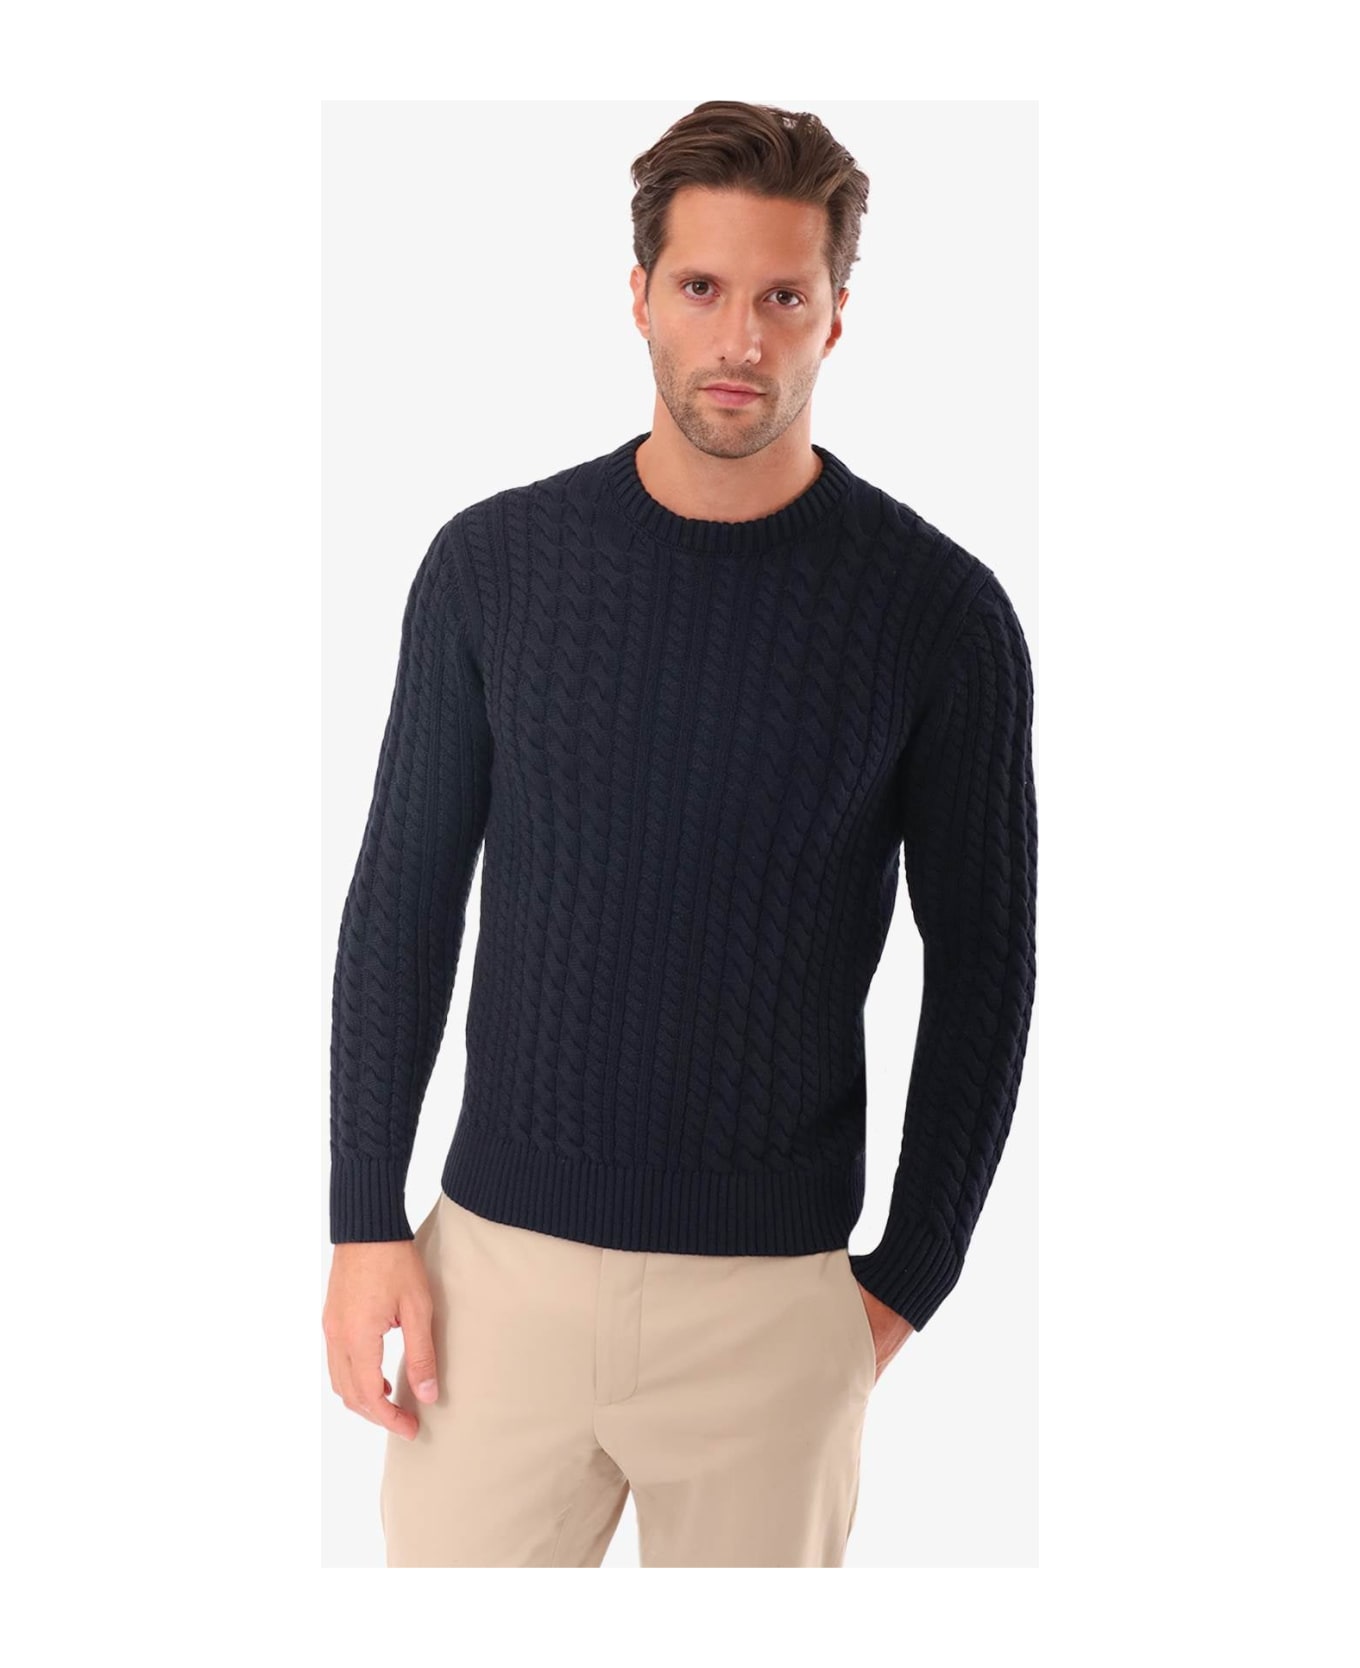 Larusmiani Sweater 'brody' Sweater - Navy ニットウェア